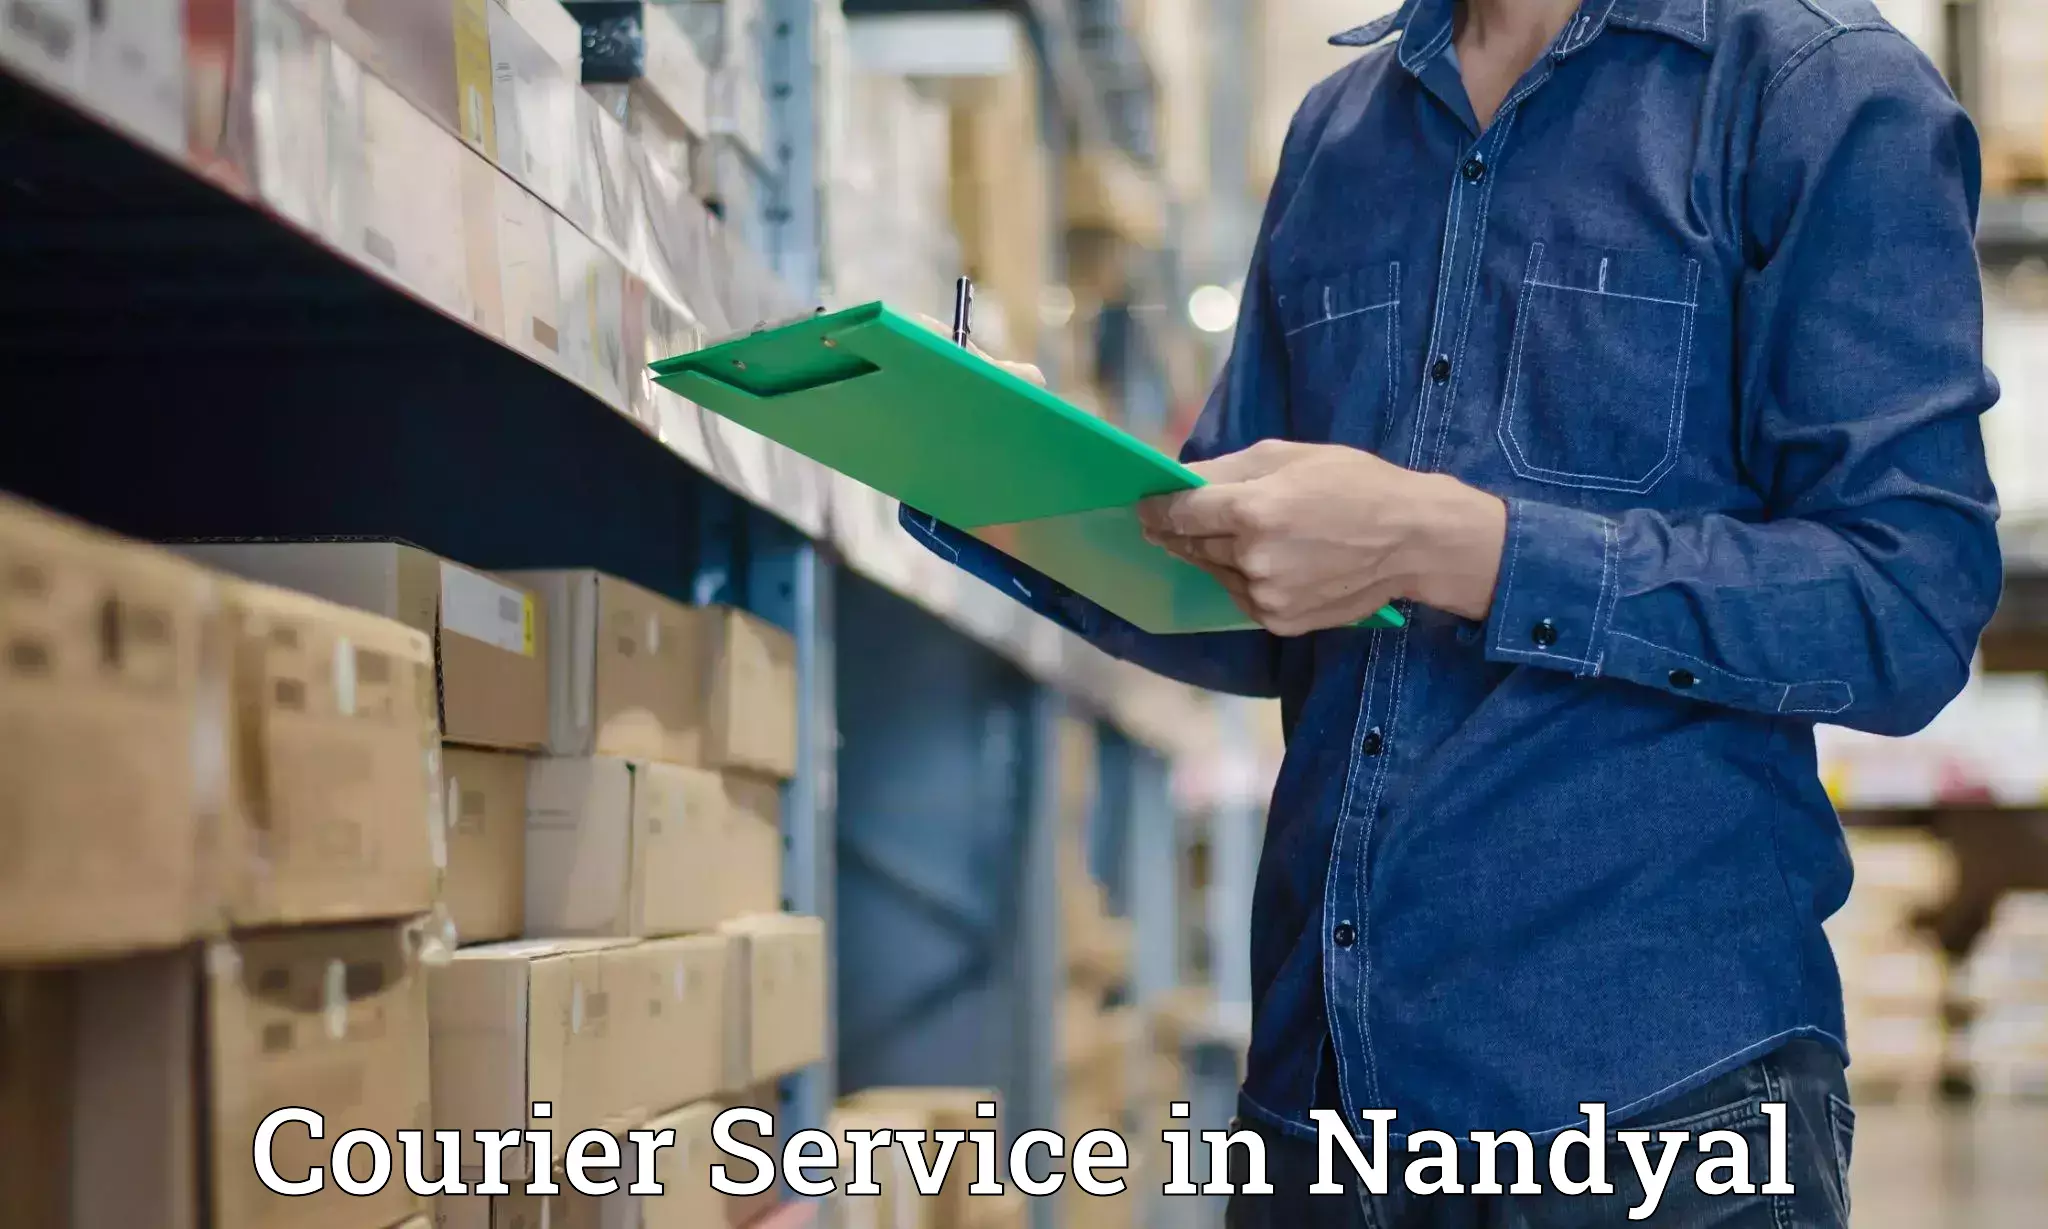 Efficient cargo handling in Nandyal